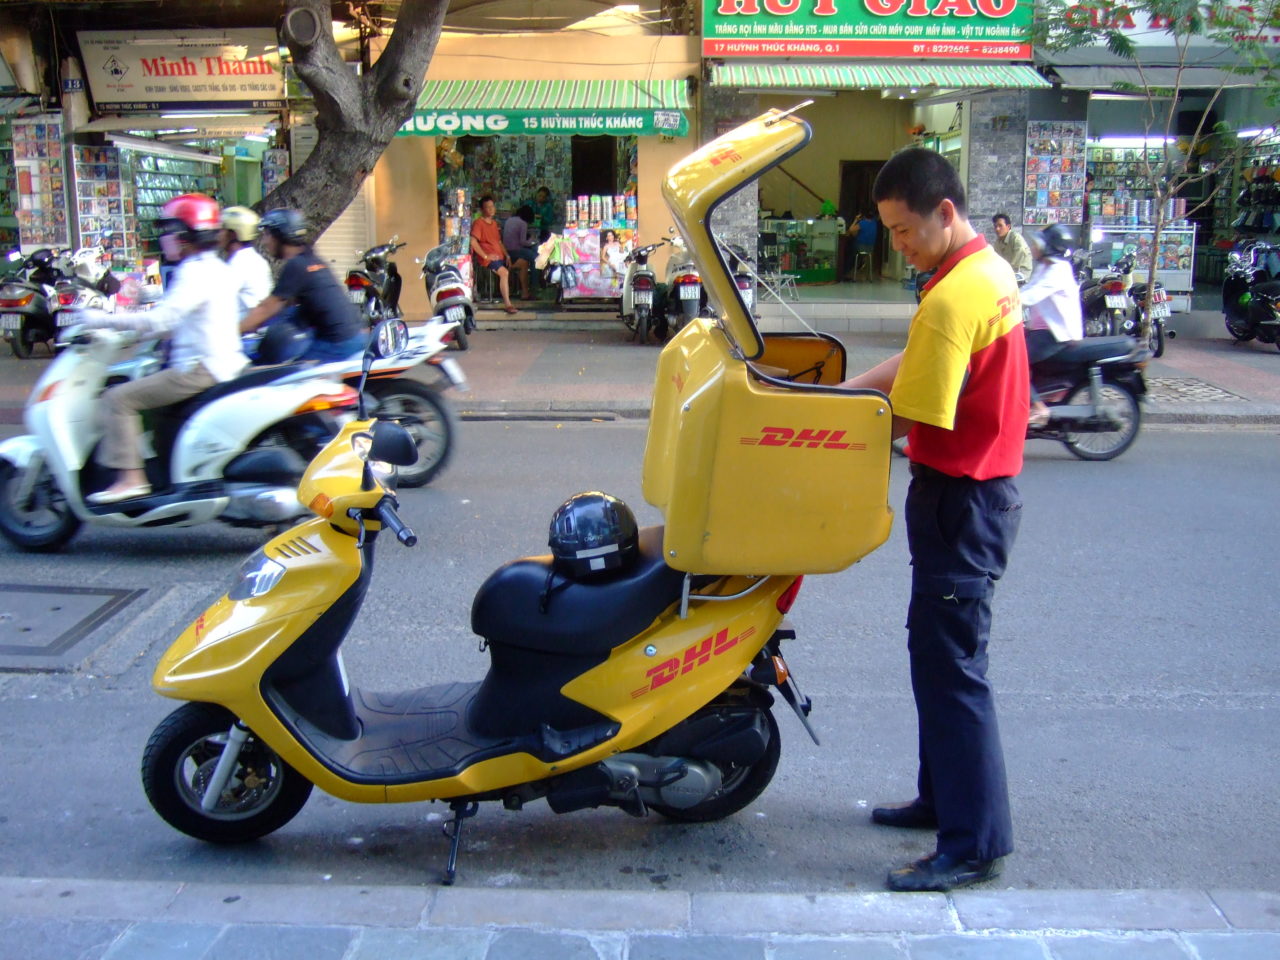 DHL-Vietnam-1280x960.jpg